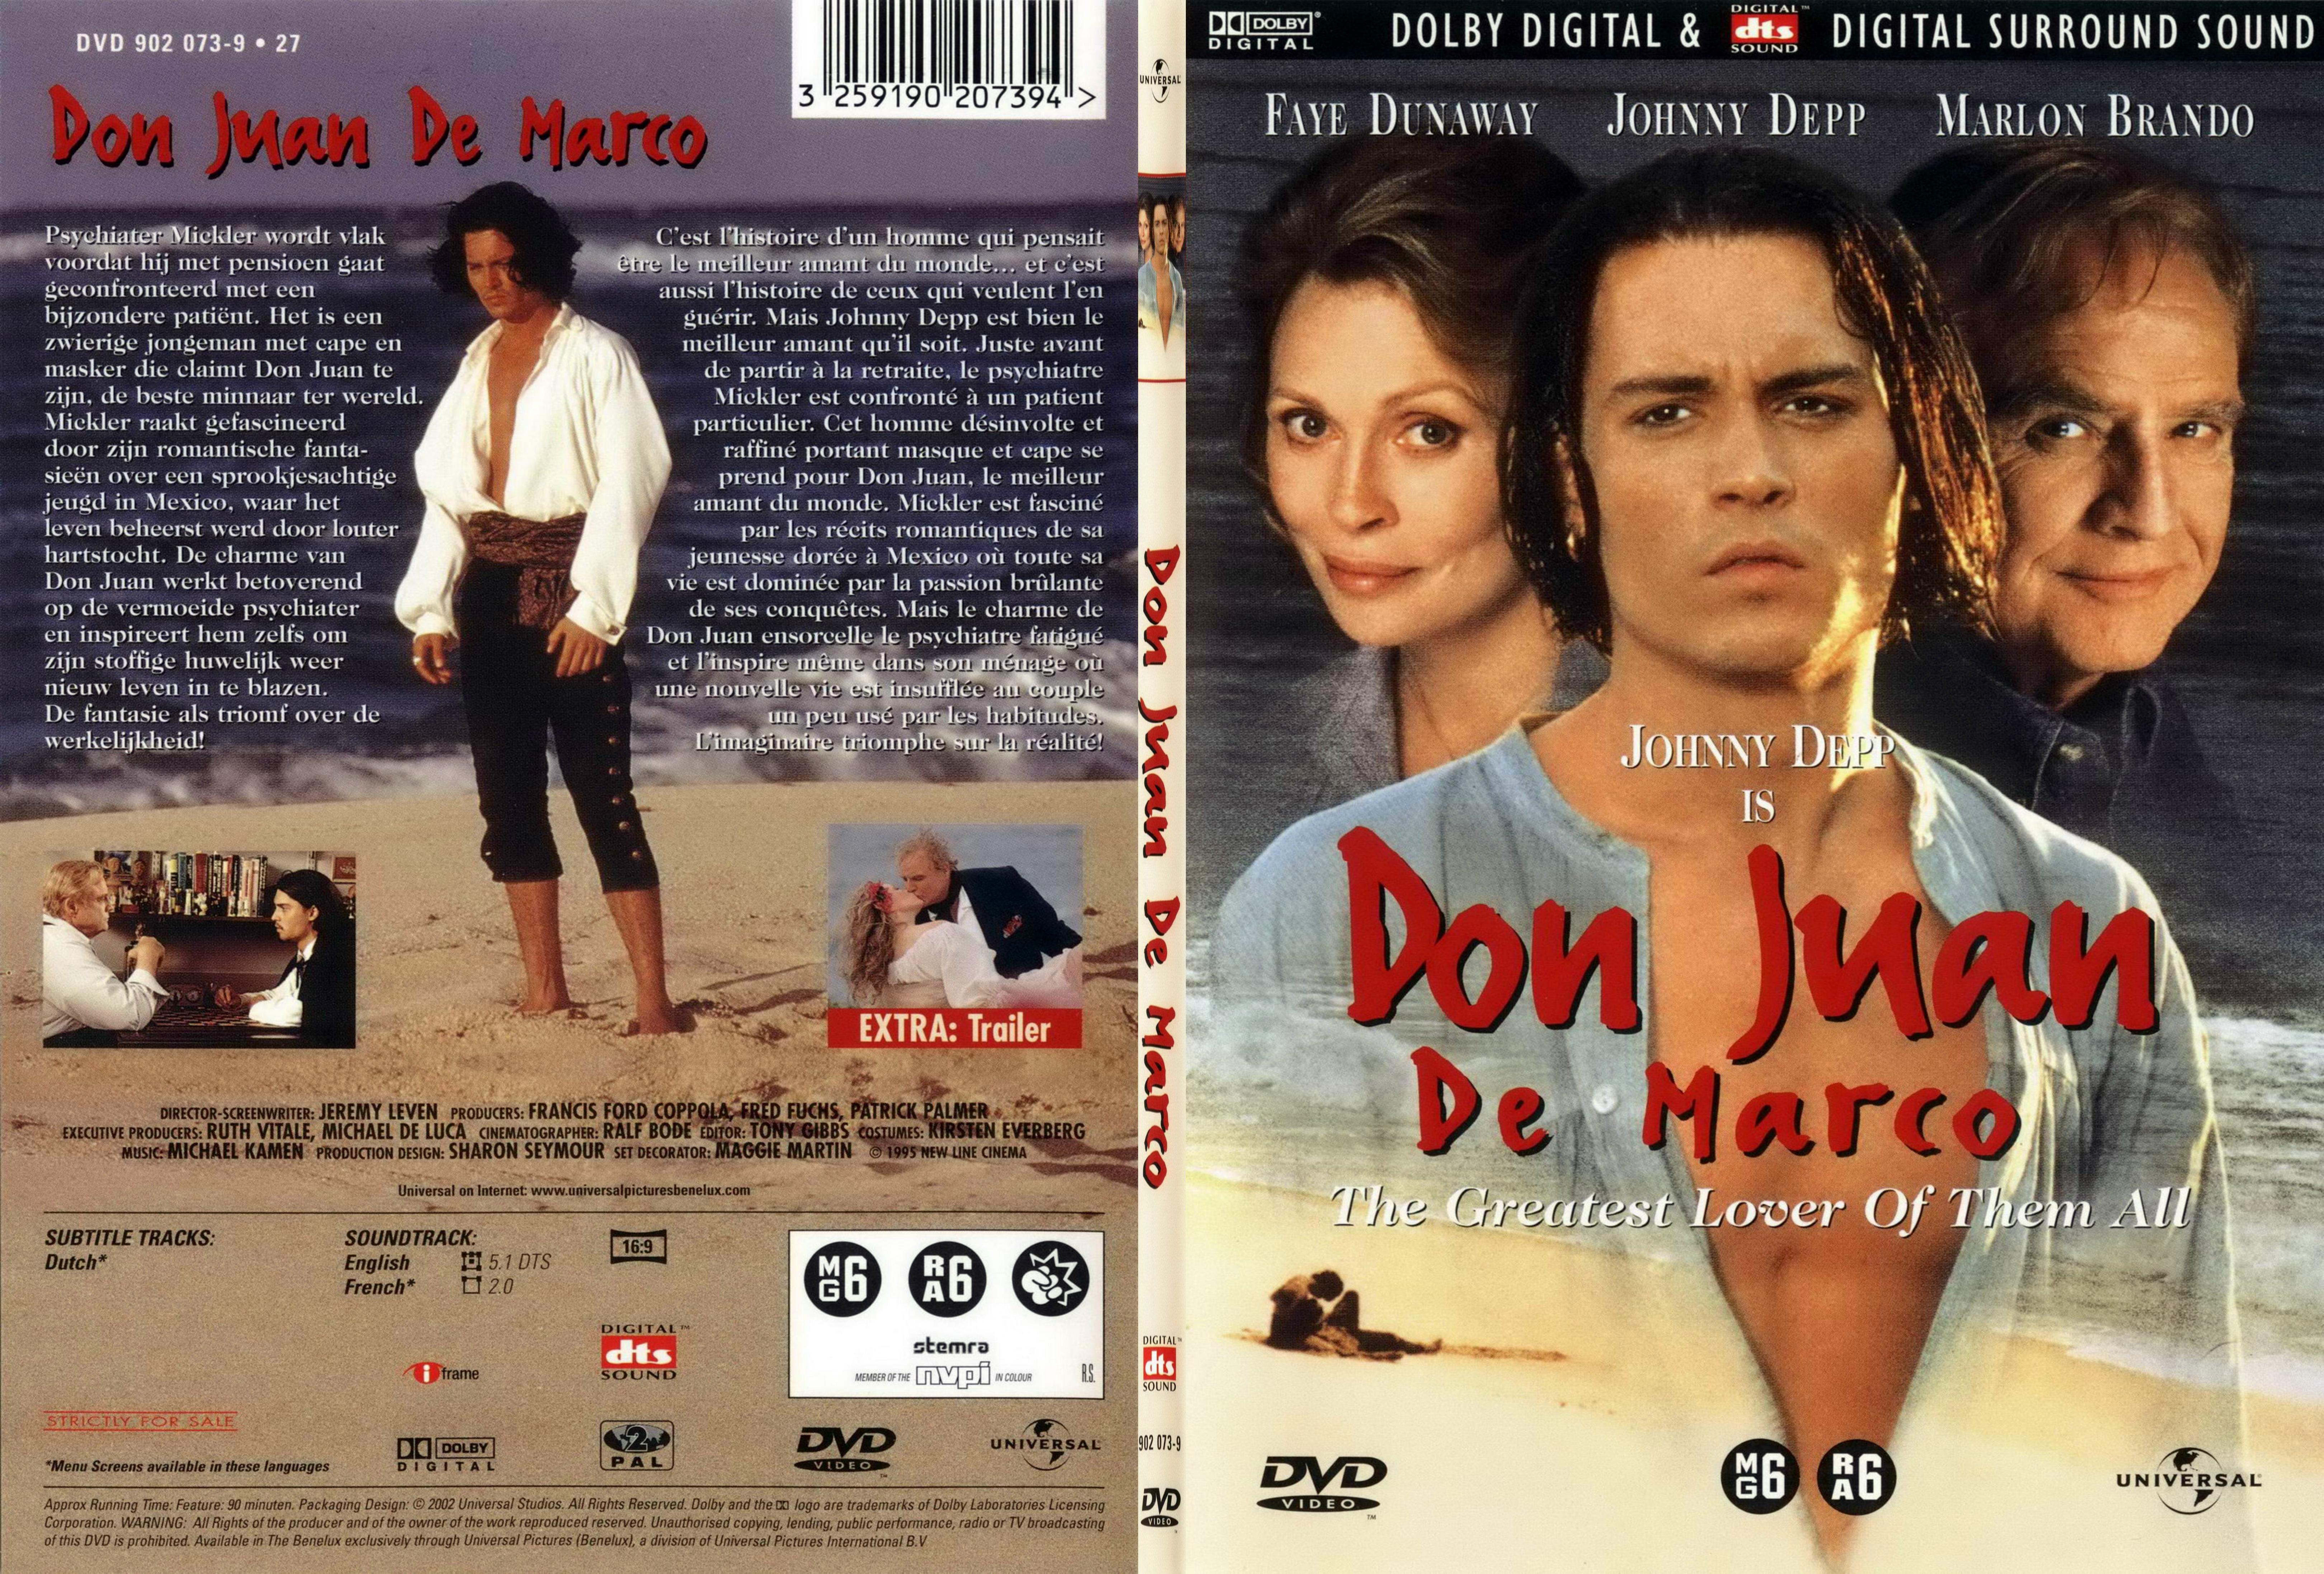 Jaquette DVD Don Juan de Marco - SLIM